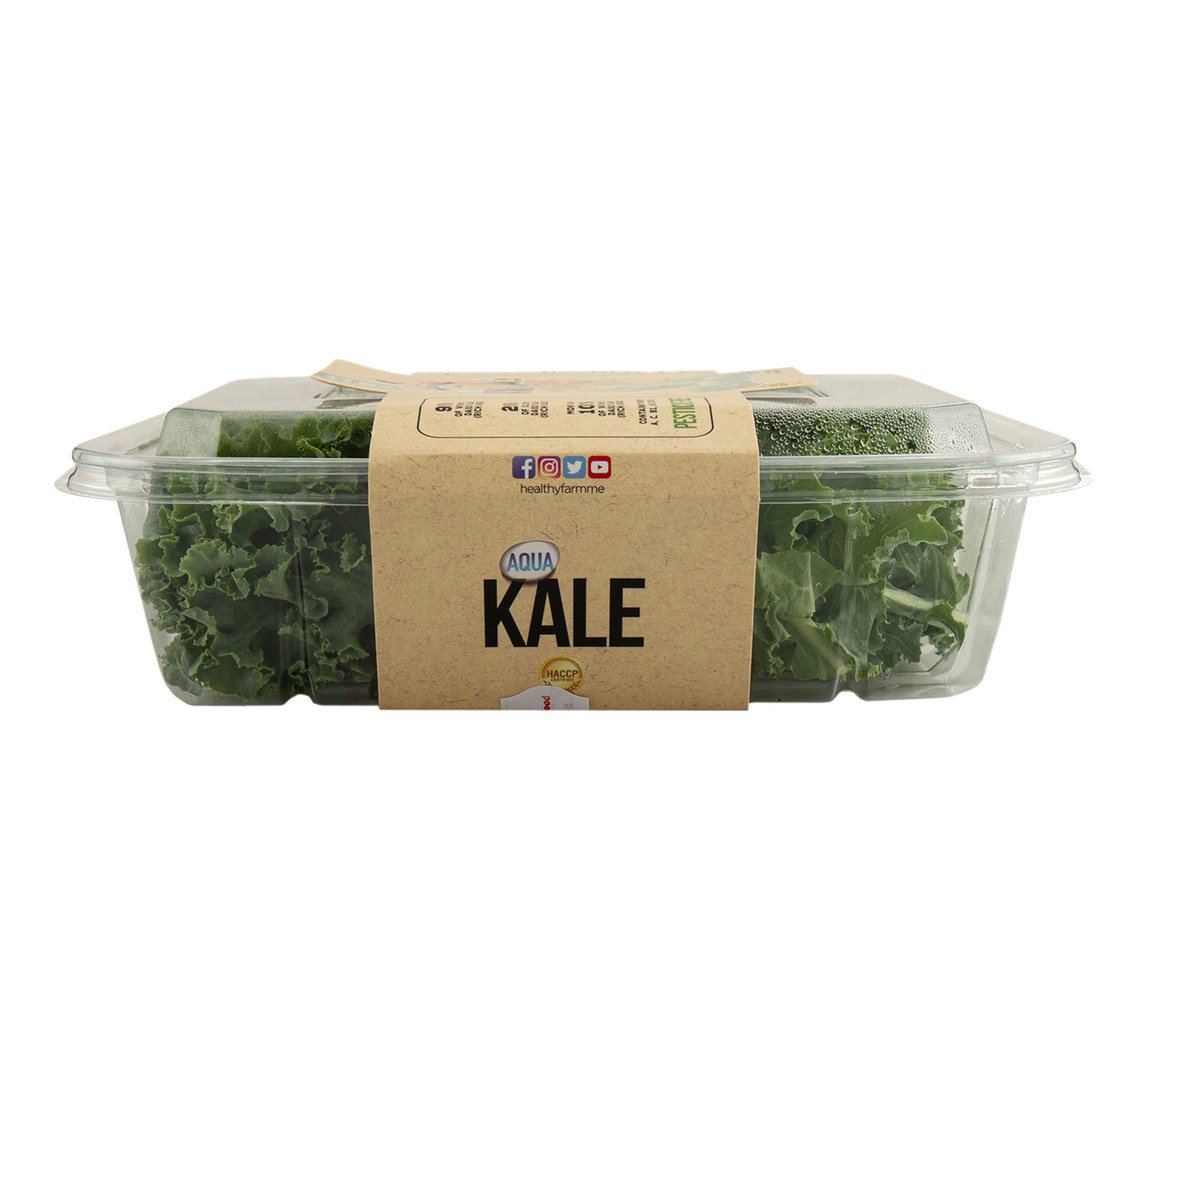 Baby Kale Leaves UAE 1 pkt